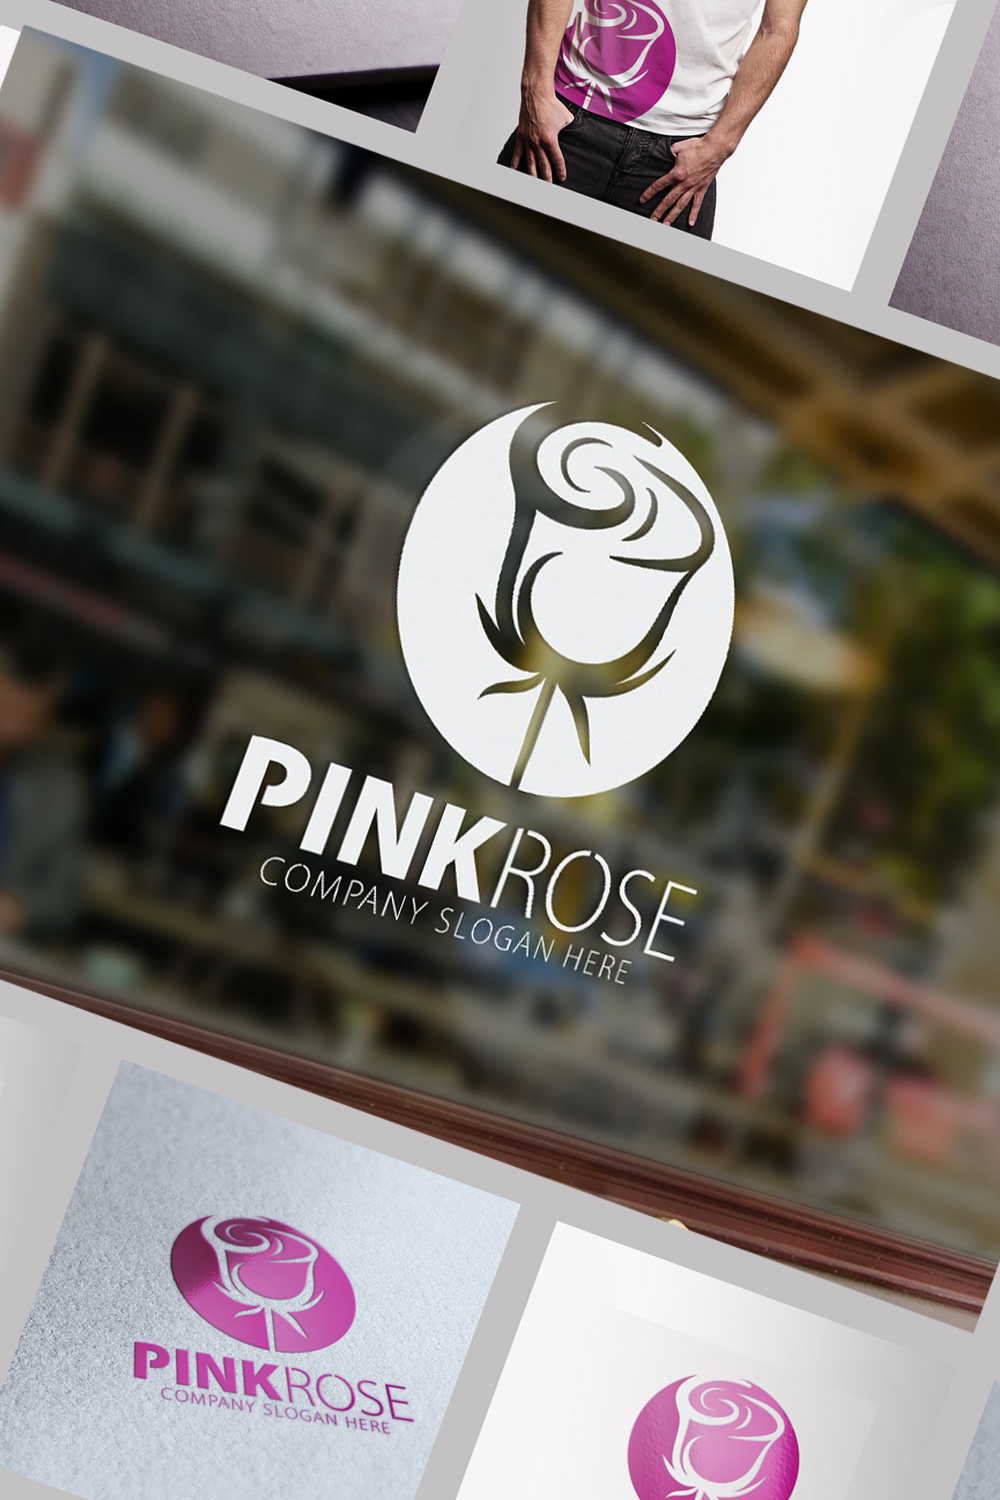 Rose logo image of pinterest.